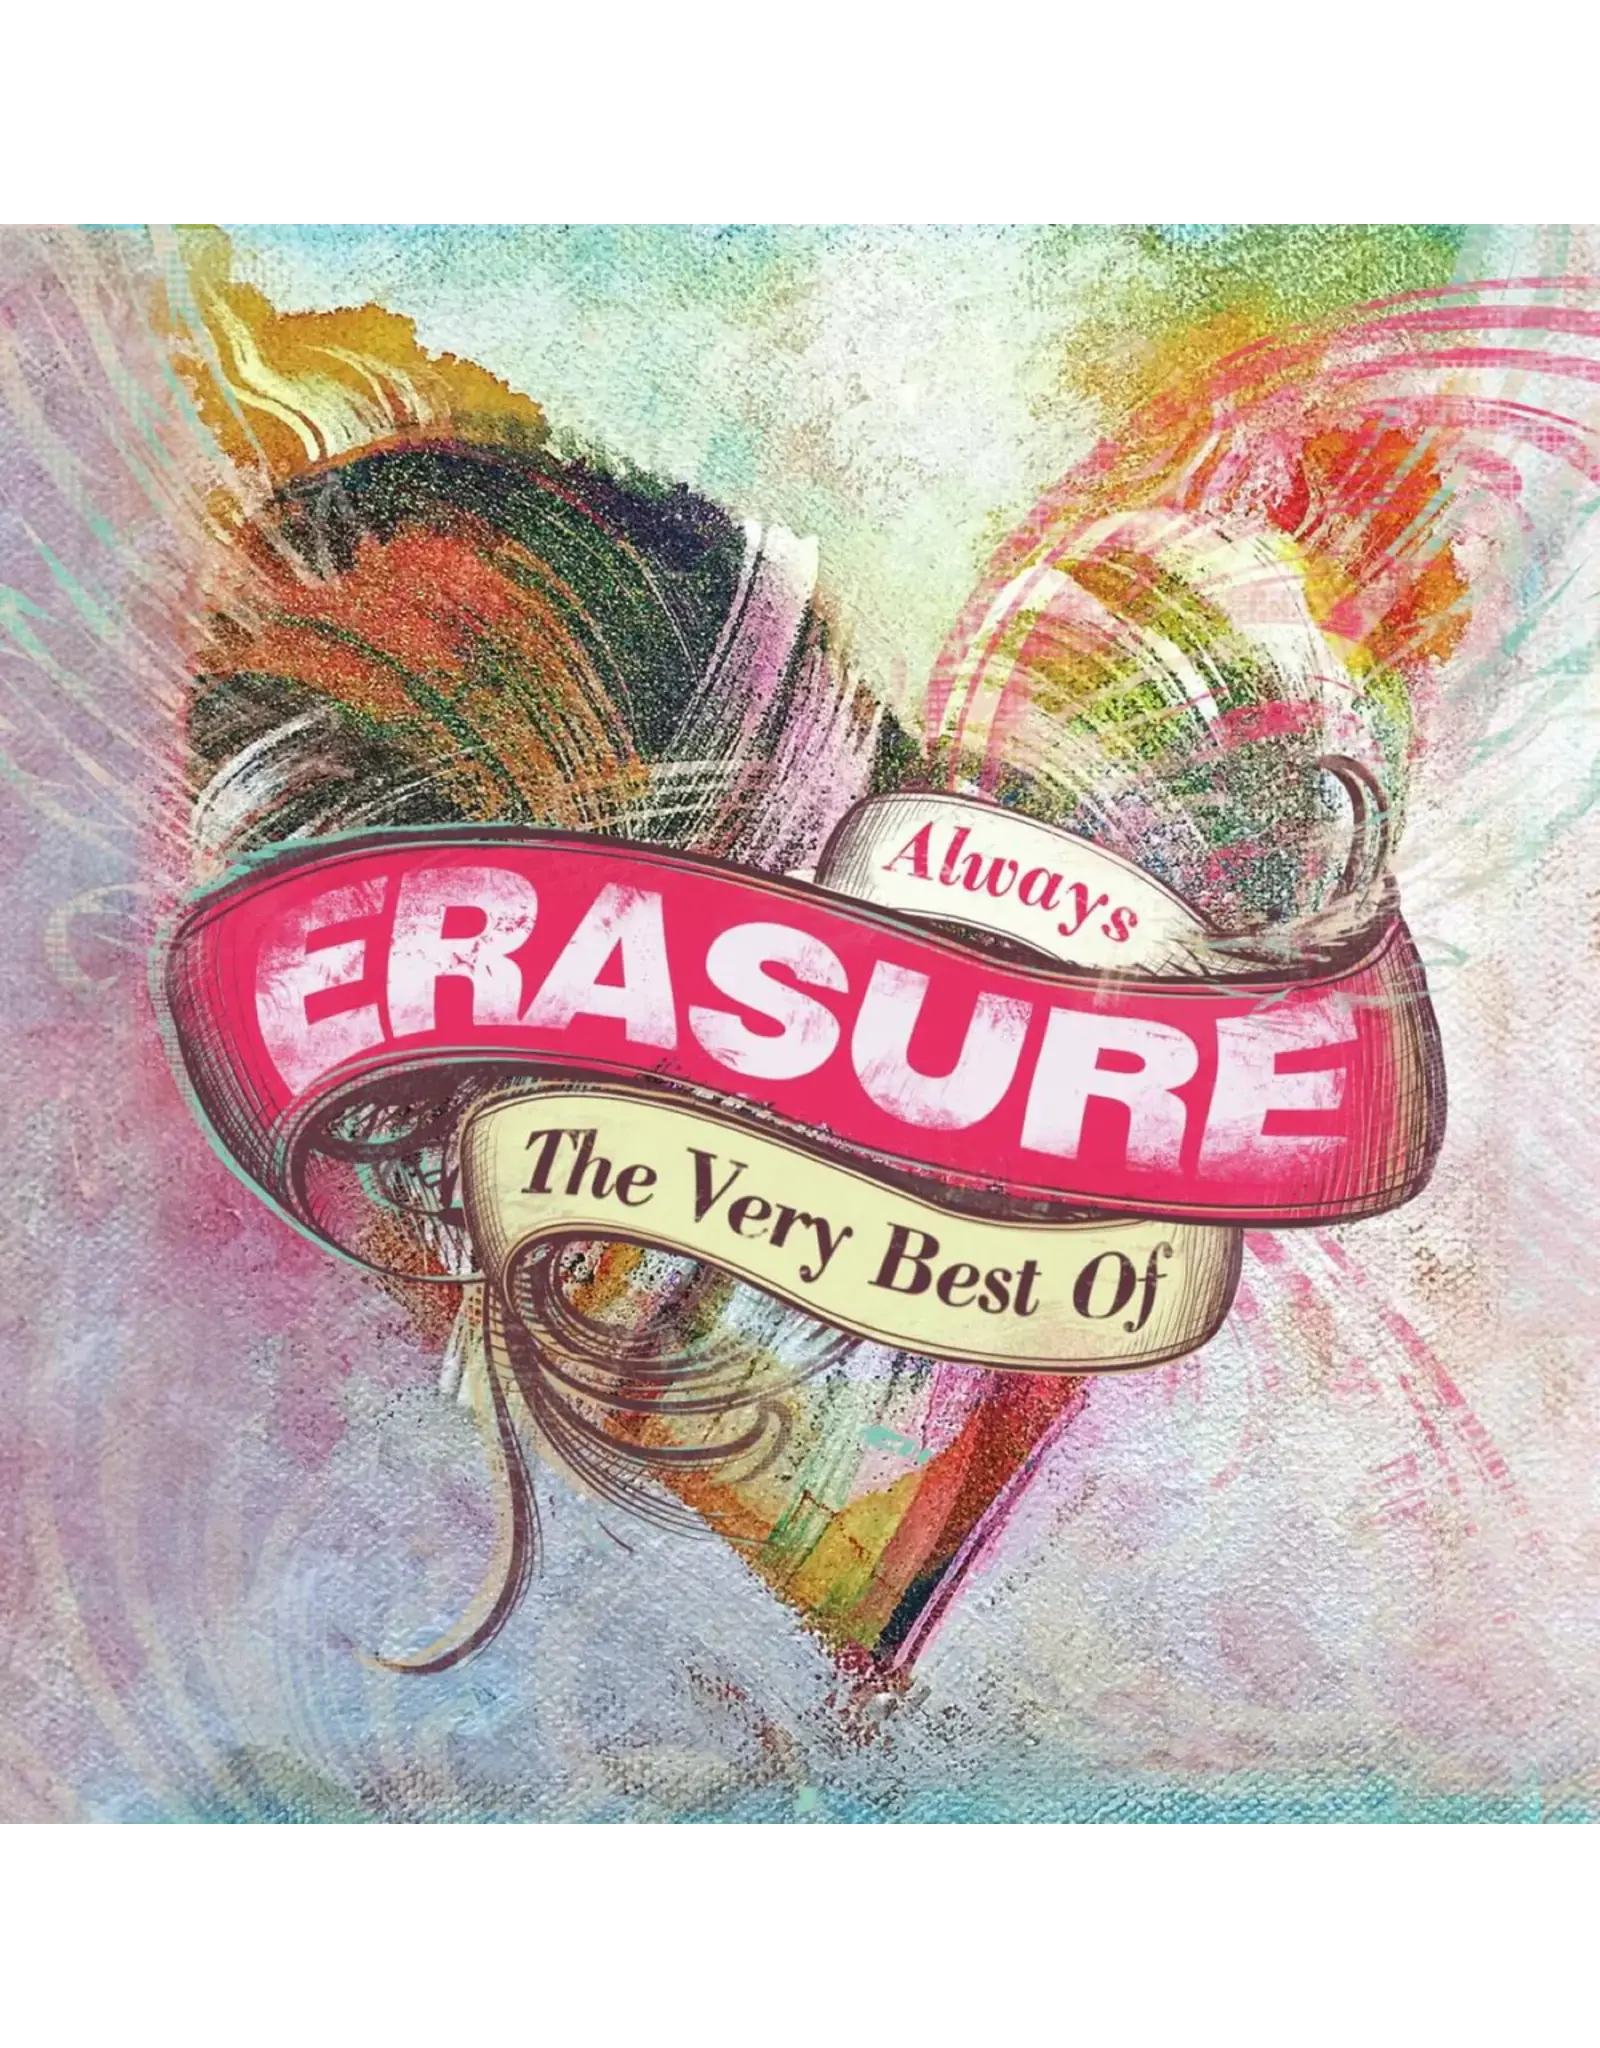 Erasure - Always: The Very Best Of Erasure